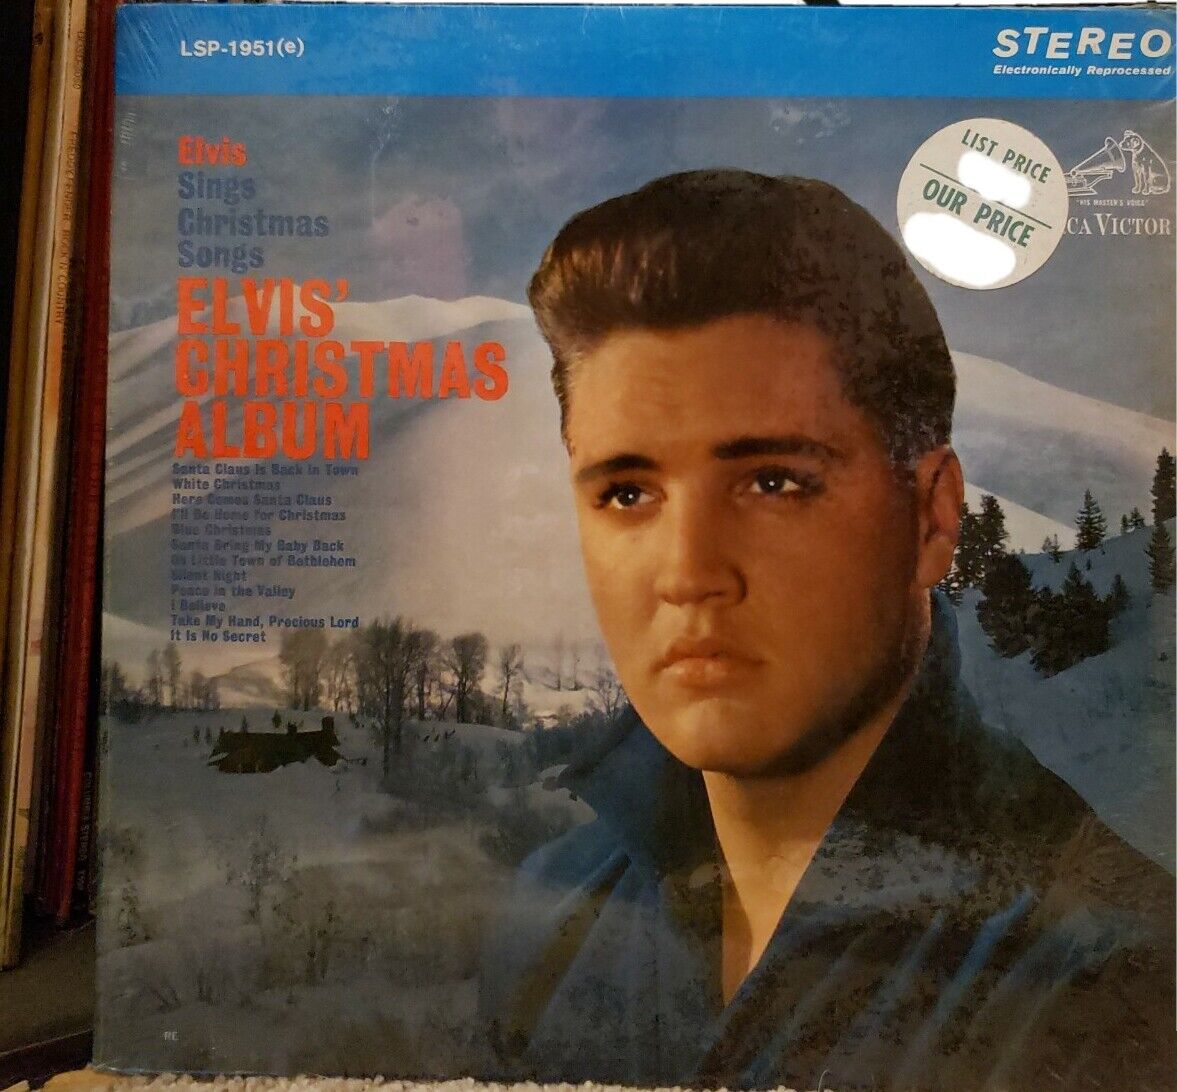 Elvis Presley 'The King' ChristmasAlbum LSP-1951e 33 Vinyl Record